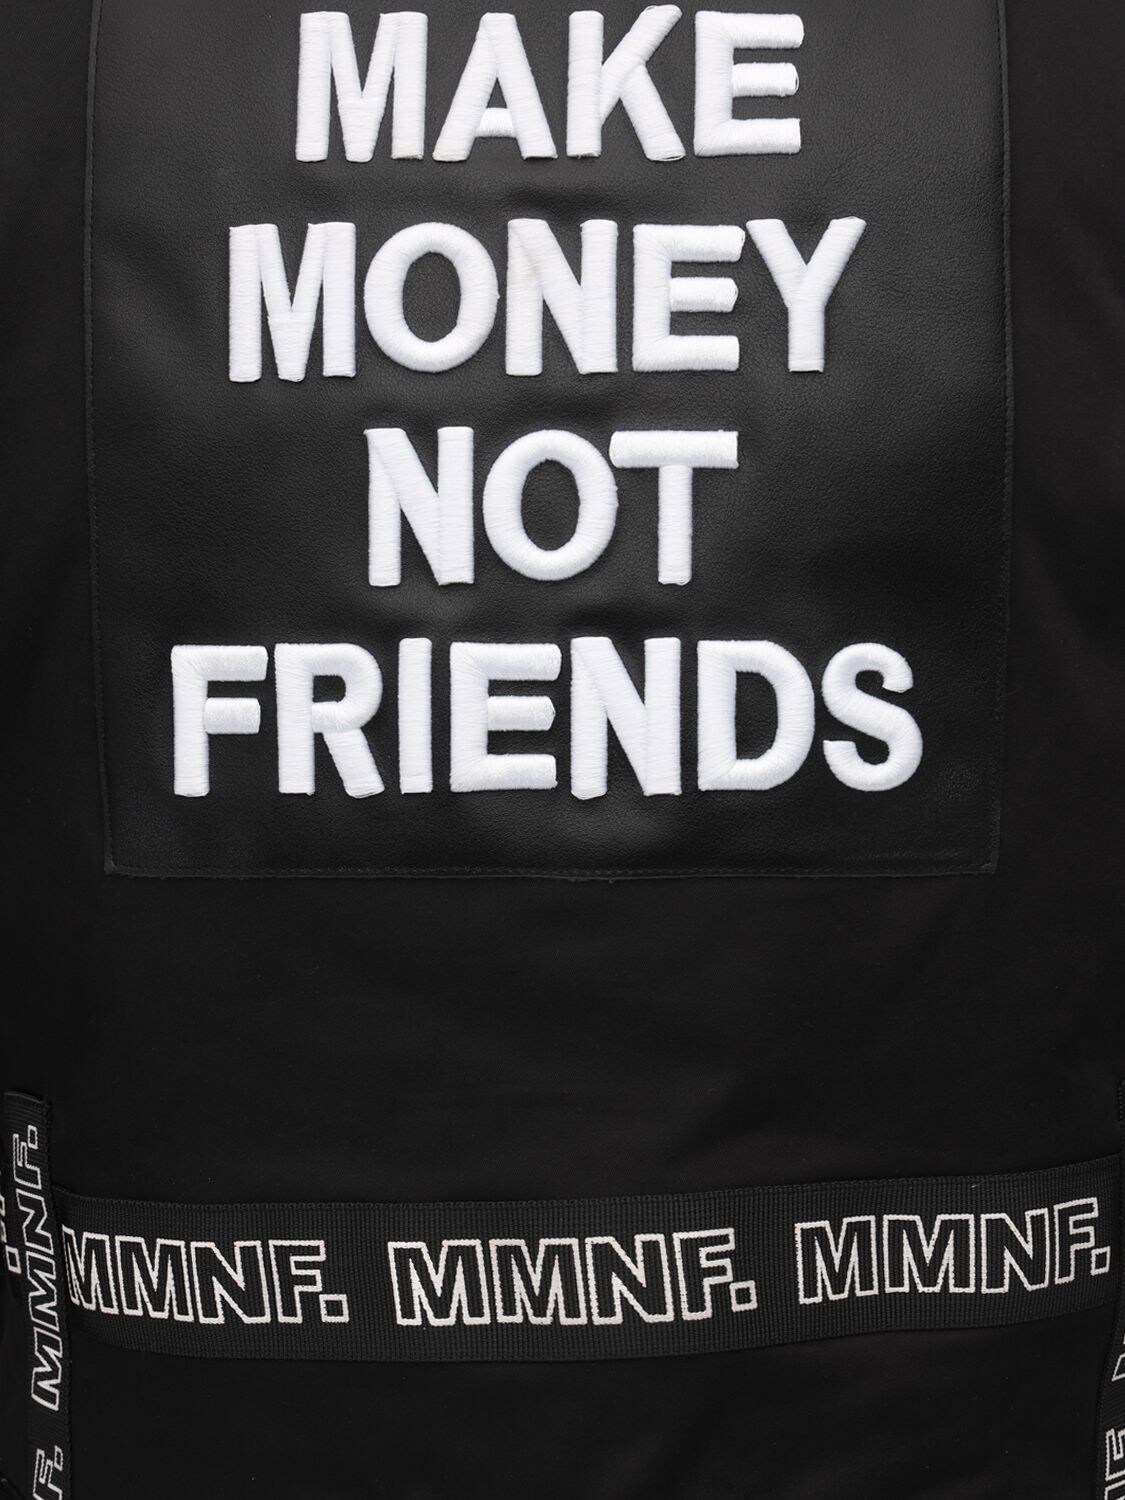 MAKE MONEY NOT FRIENDS LOGO VEST W/BELTS 71IWIX027-QKXBQ0S1